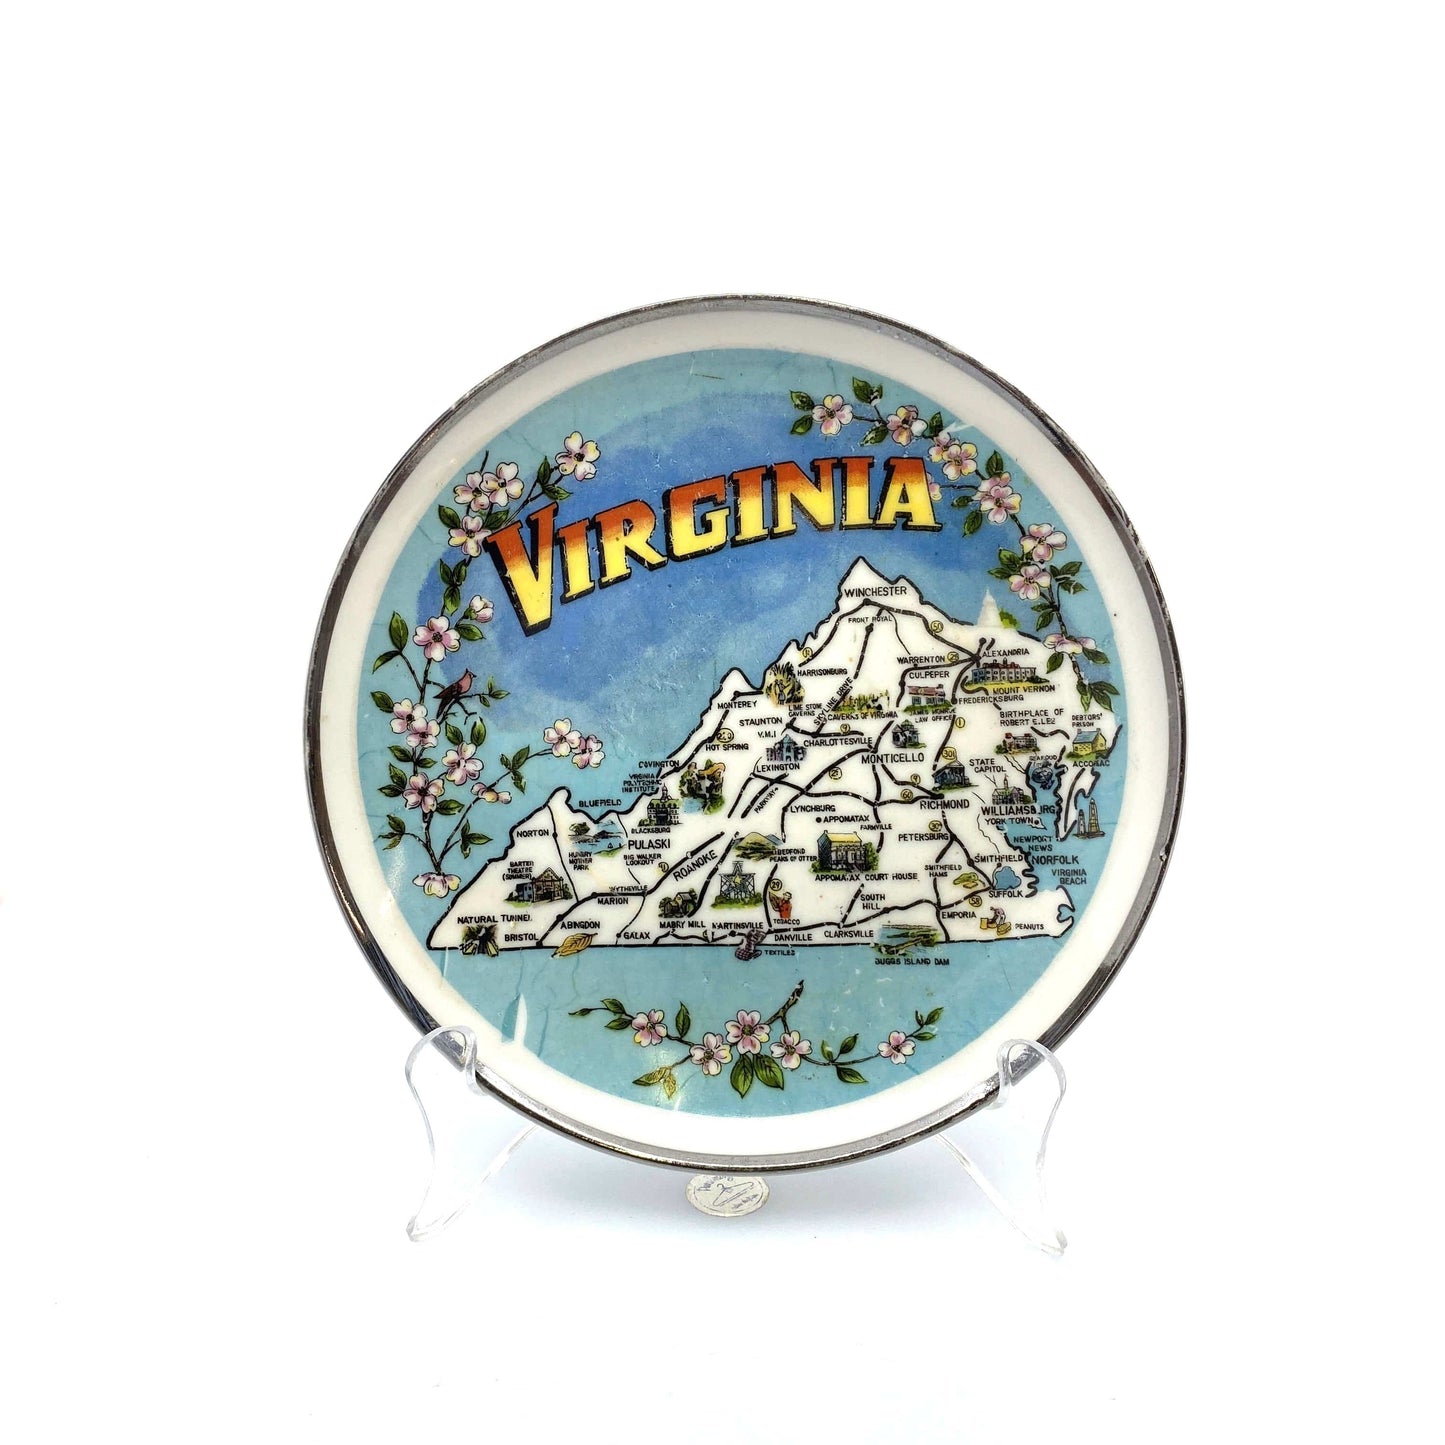 Vintage State Souvenir Plate “VIRGINIA” Collectible, White - 7.75”